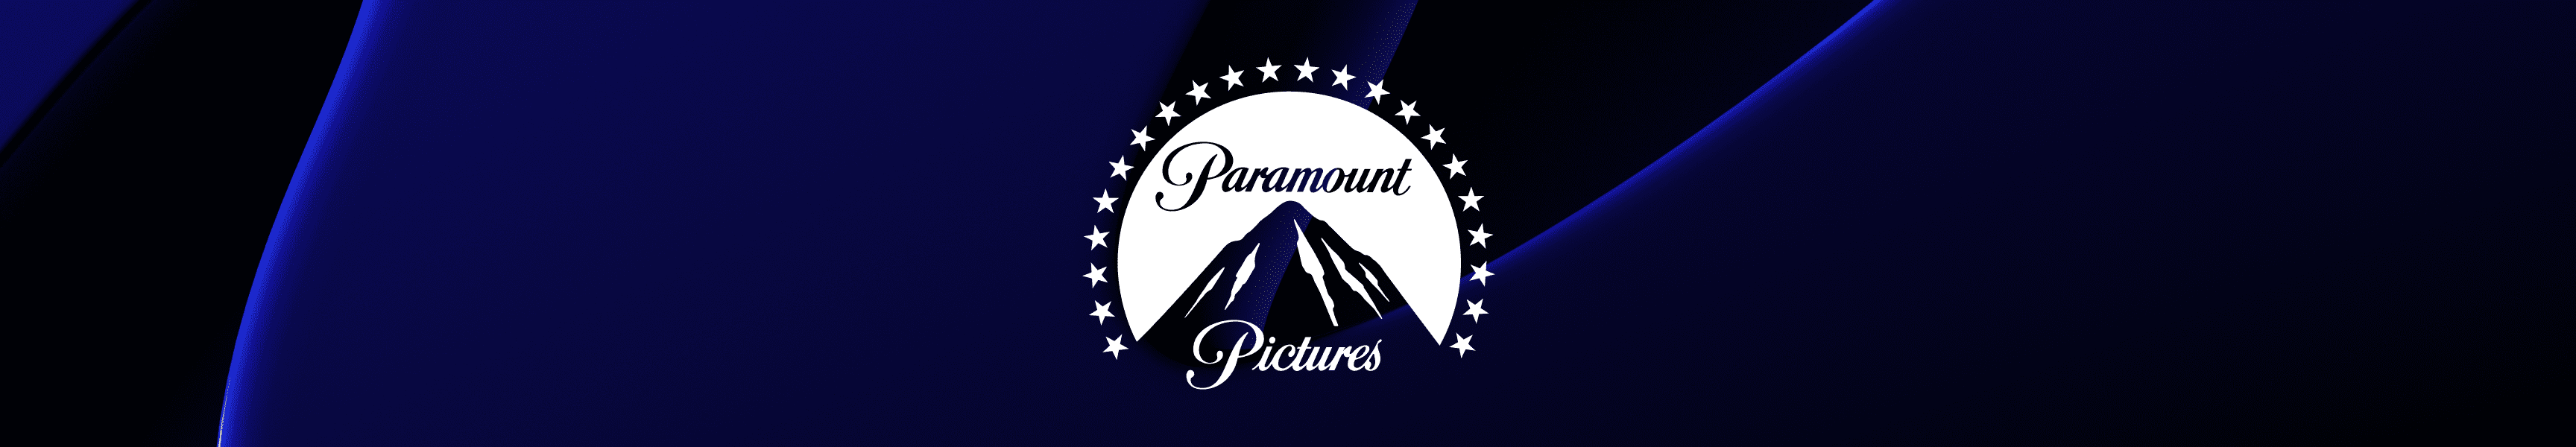 Paramount Pictures Haar-Accessoires